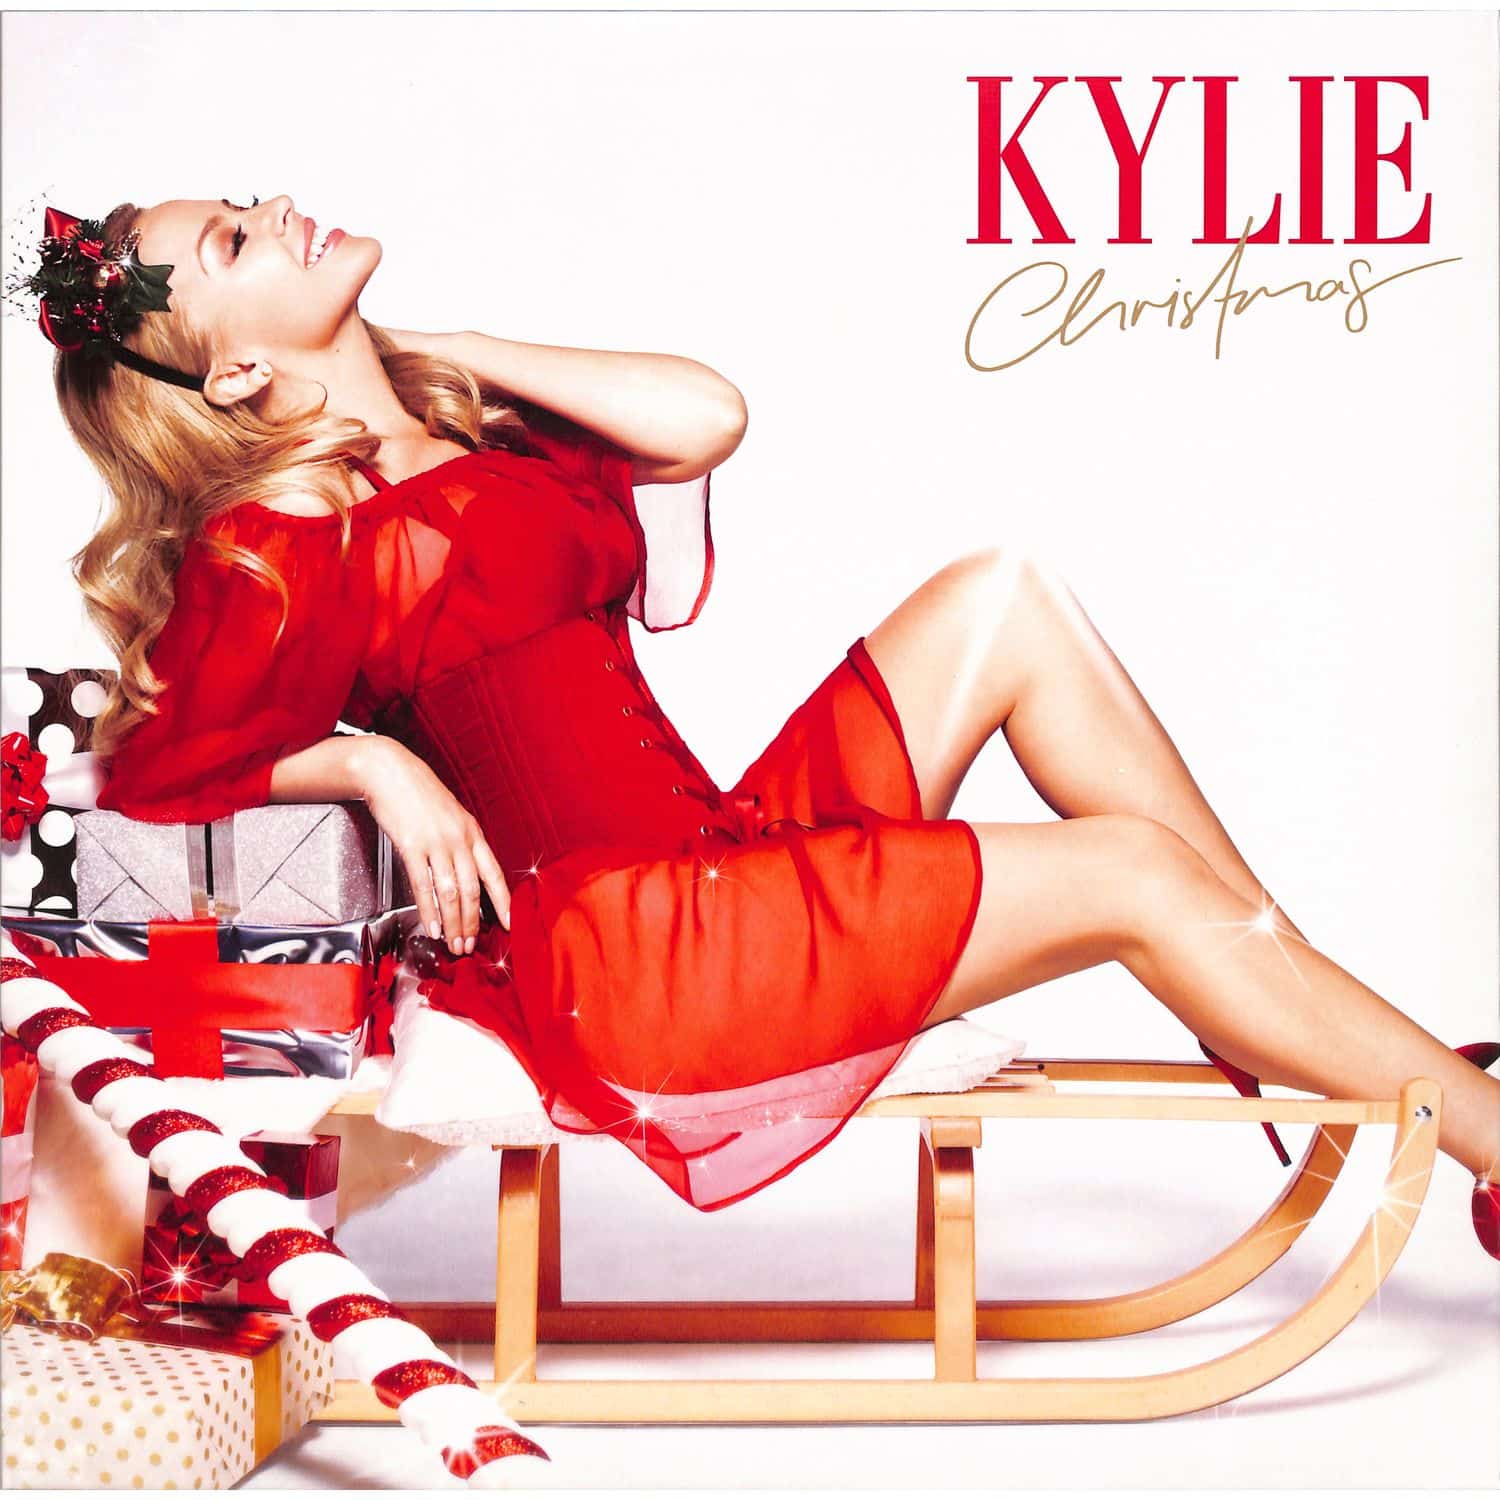 Kylie Minogue - KYLIE CHRISTMAS 